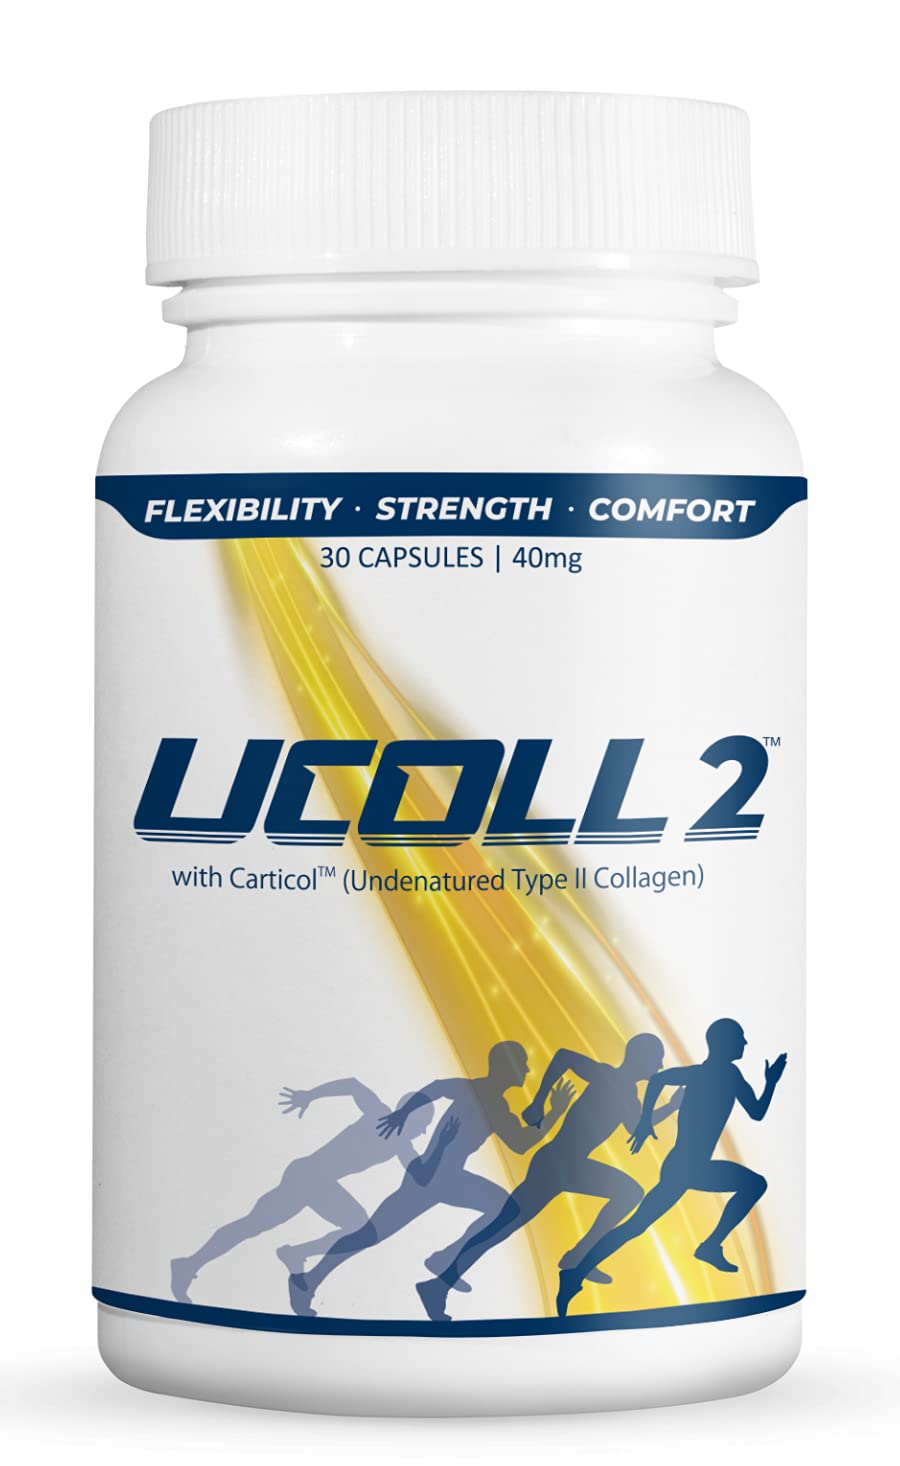 Ucoll 2 Undenatured Type 2 Collagen Joint Support Supplement Image